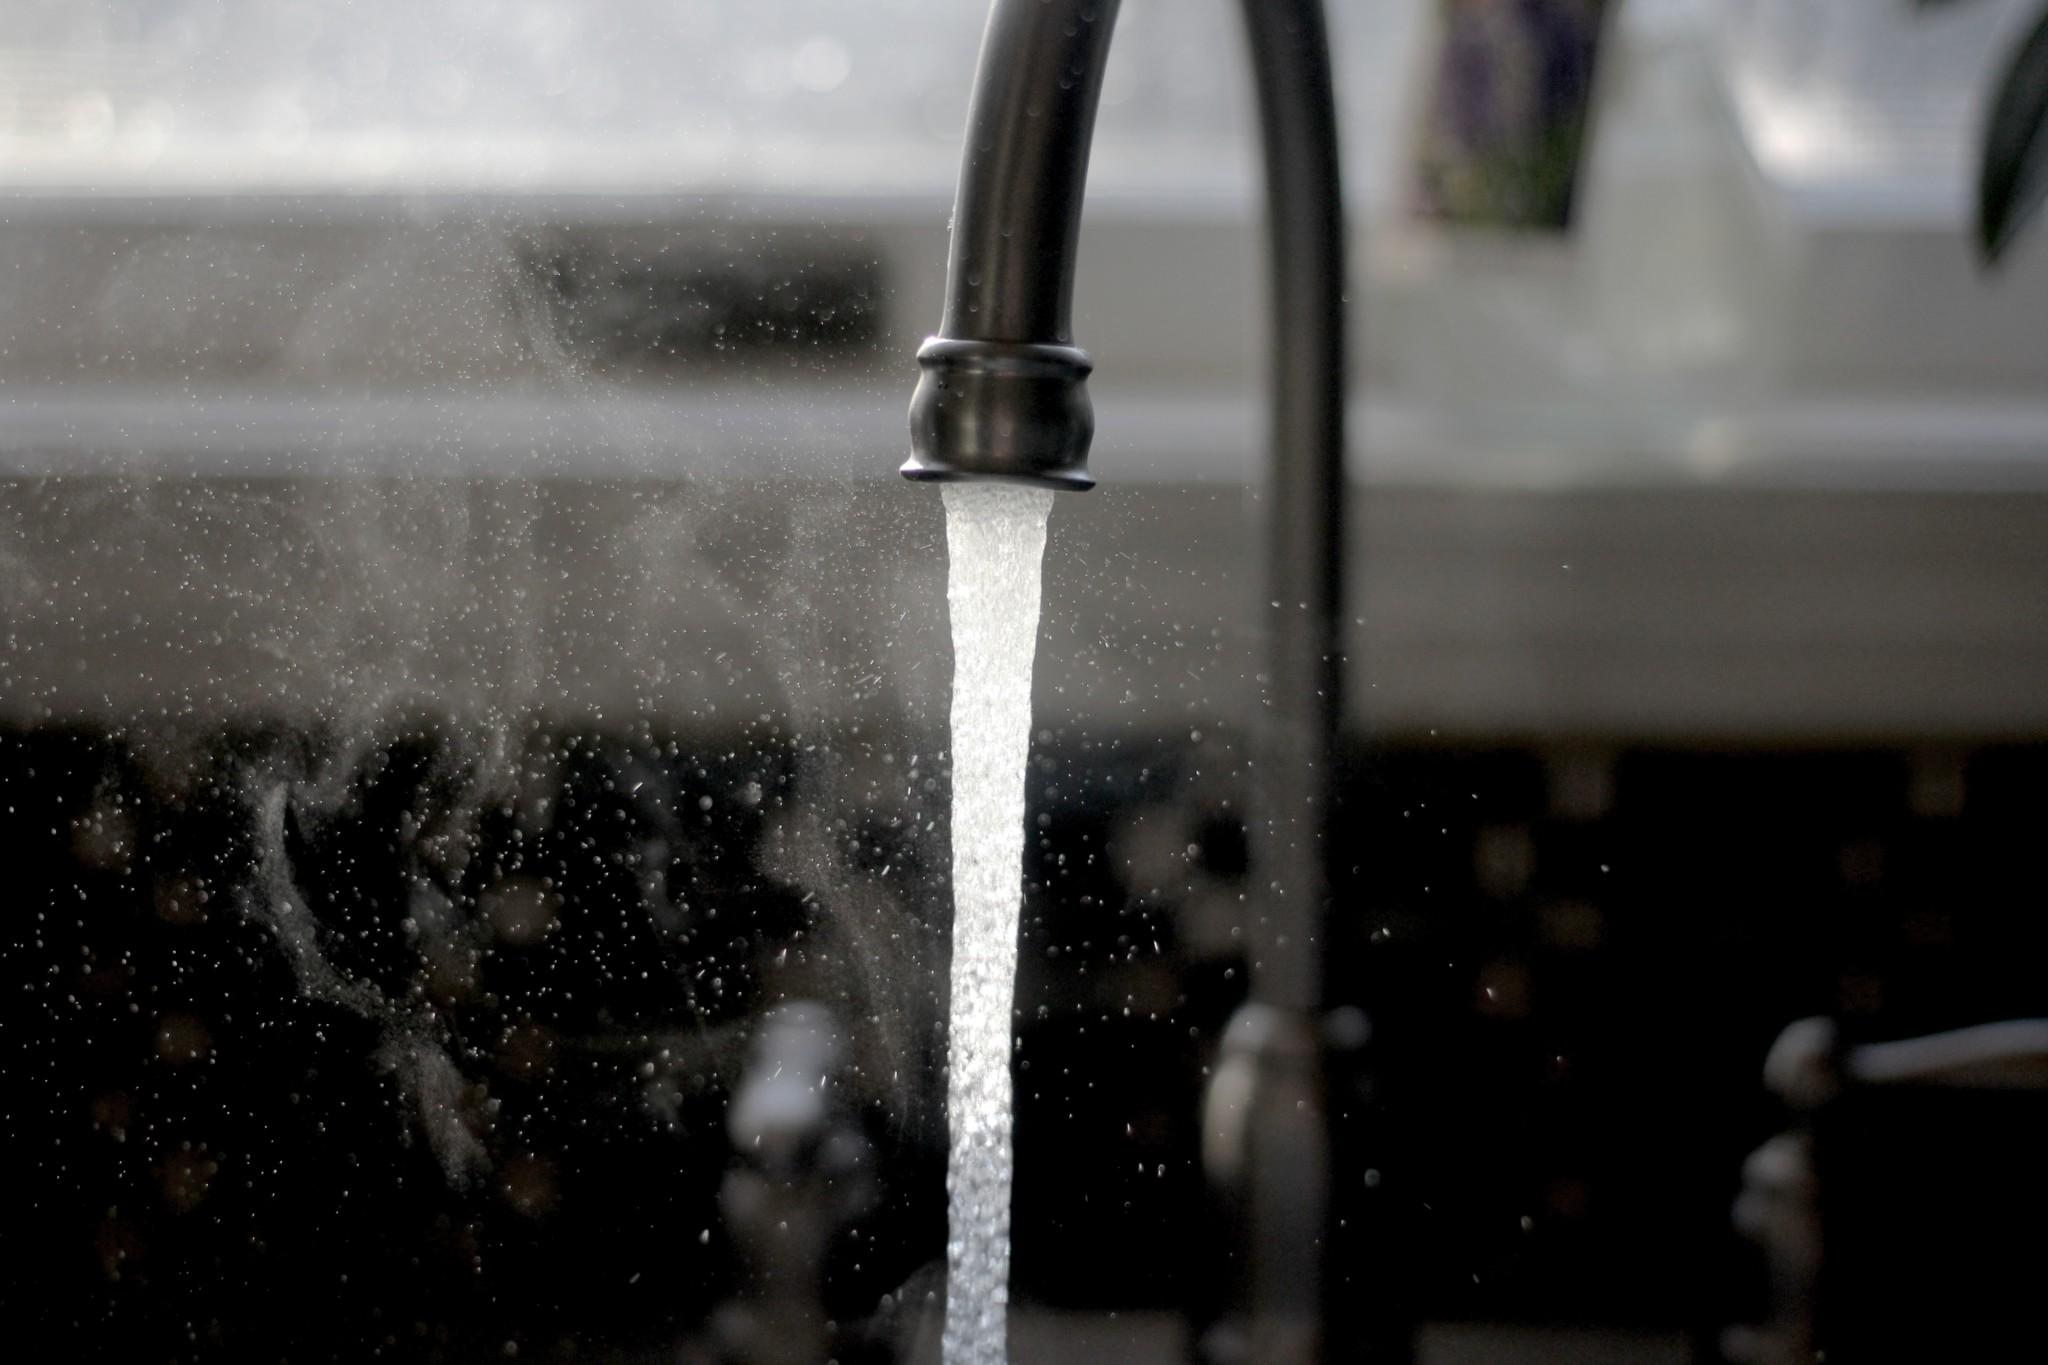 https://sensorex.com/wp-content/uploads/2020/03/tap-water-faucet-streaming-scaled-1.jpg